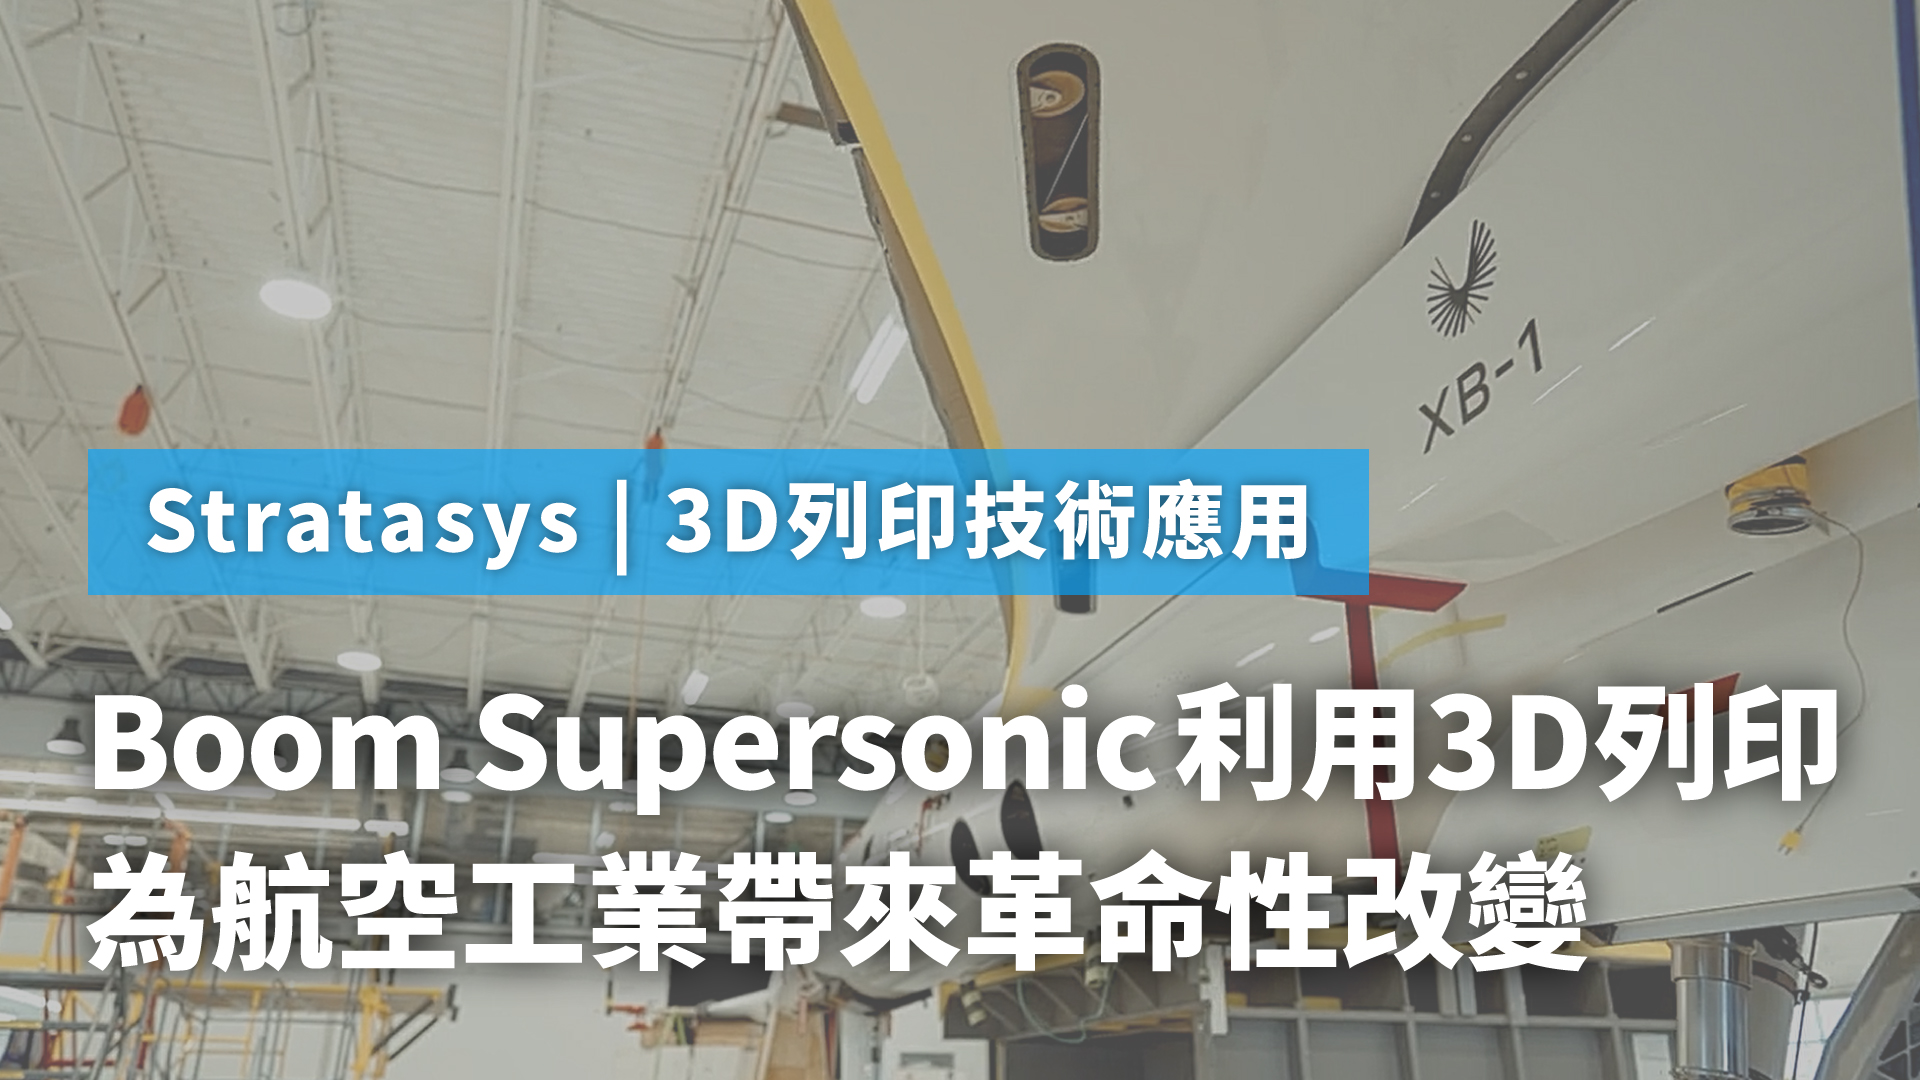 3D列印技術應用 | Boom Supersonic利用3D列印為航空工業帶來革命性改變